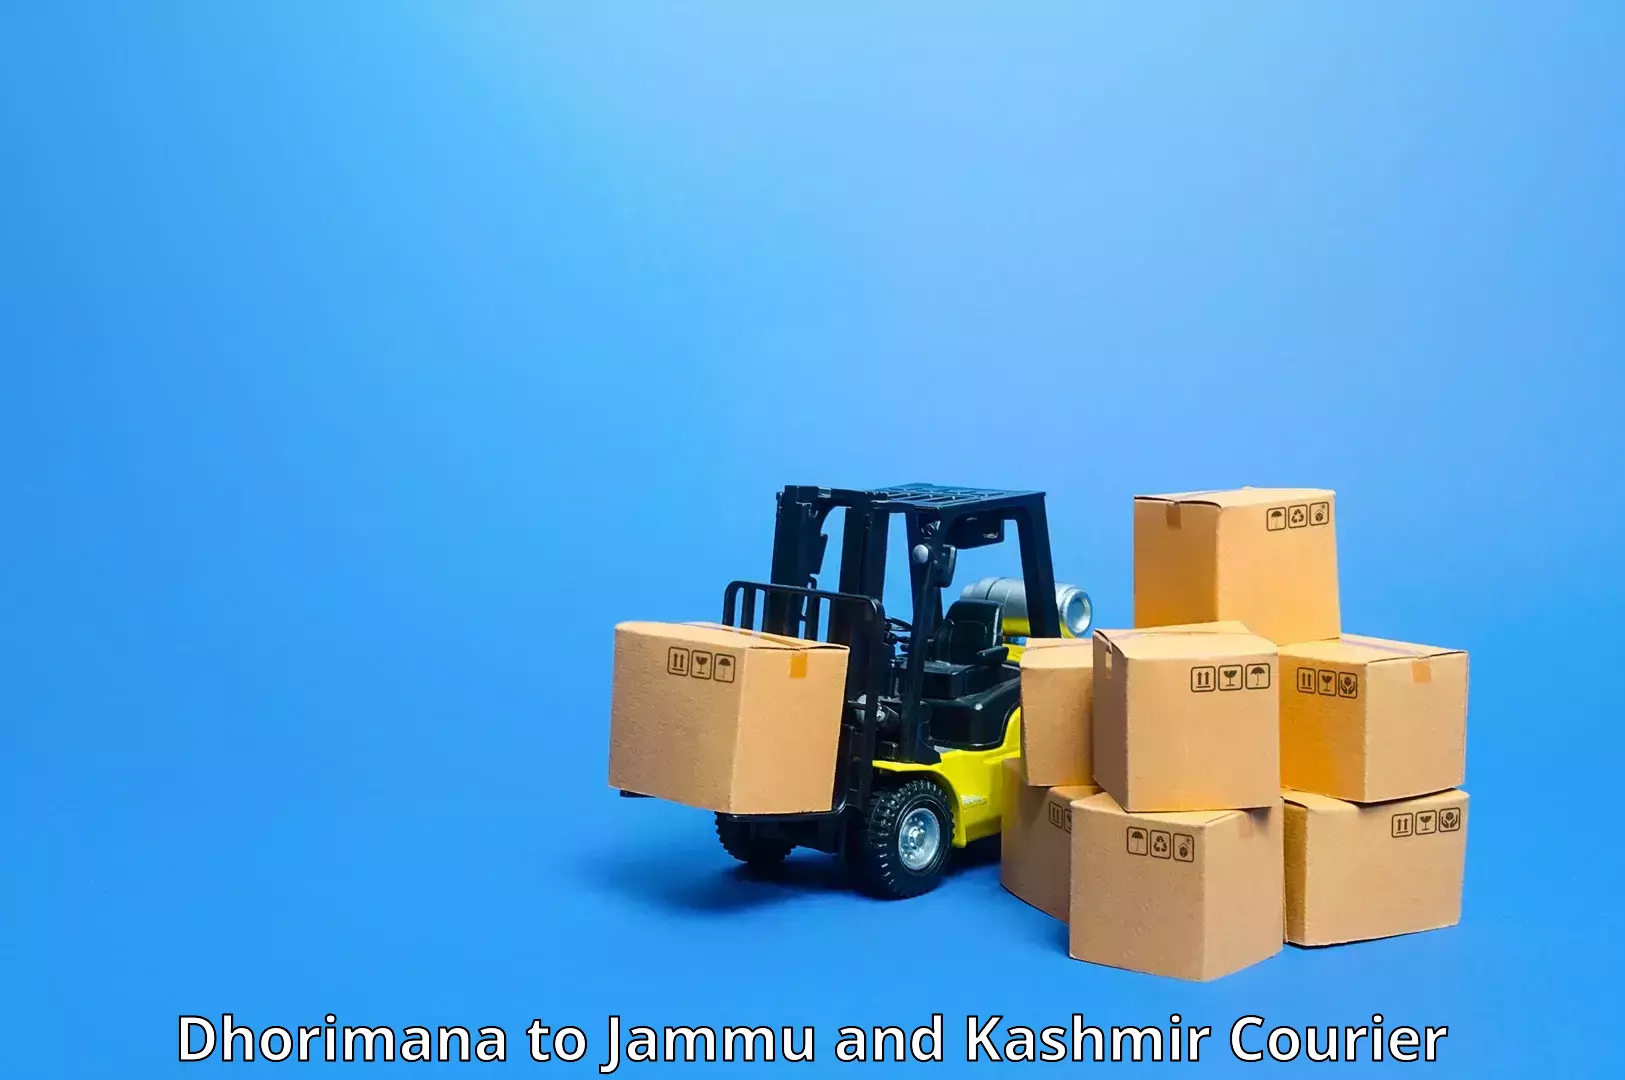 Courier service comparison in Dhorimana to Parsa